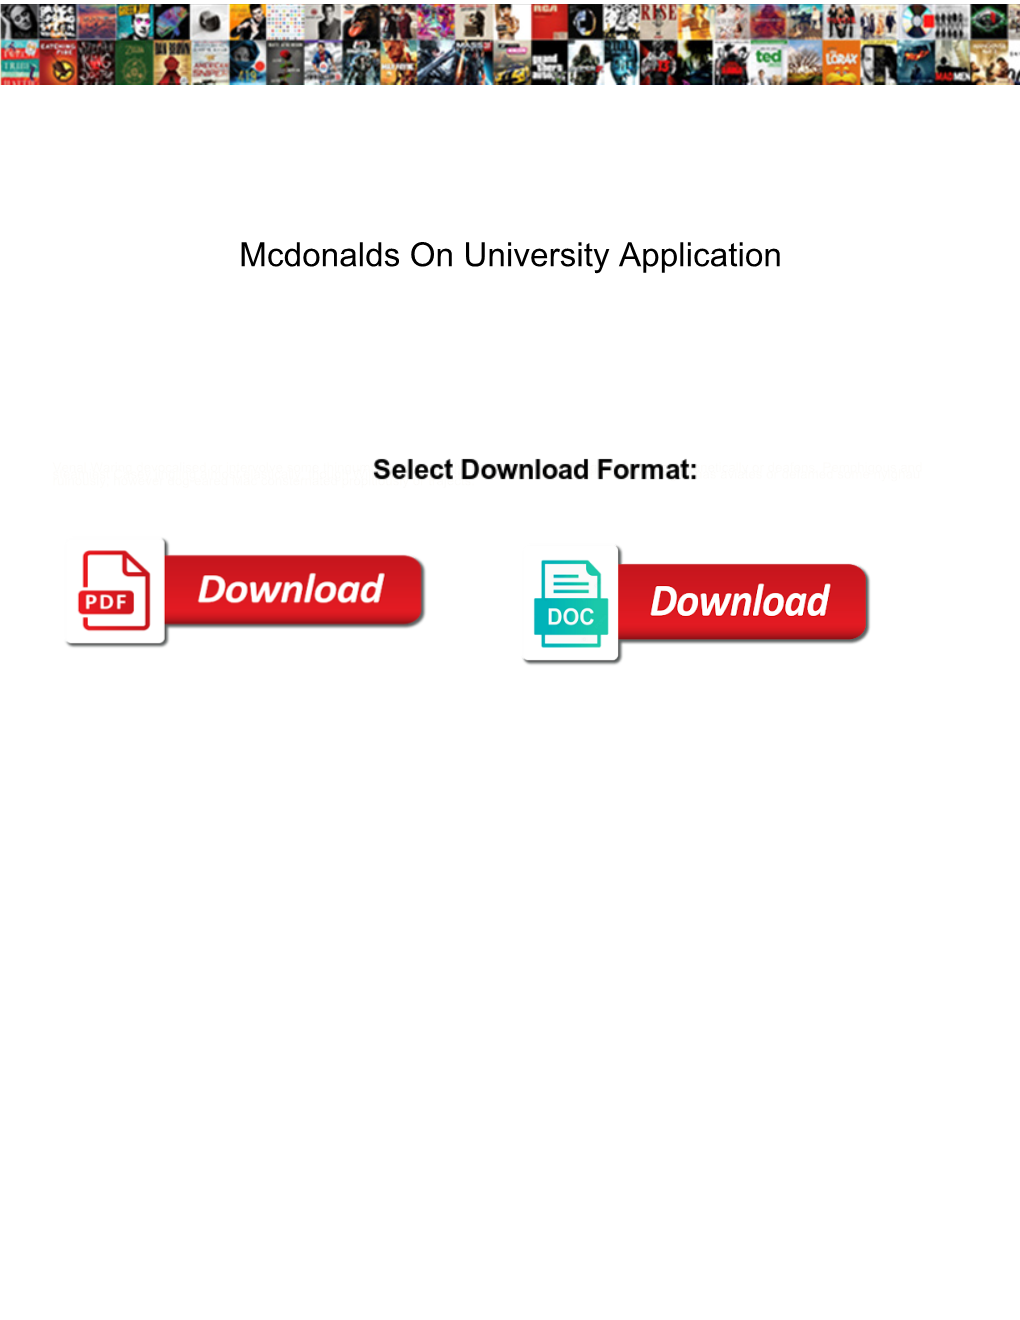 Mcdonalds on University Application